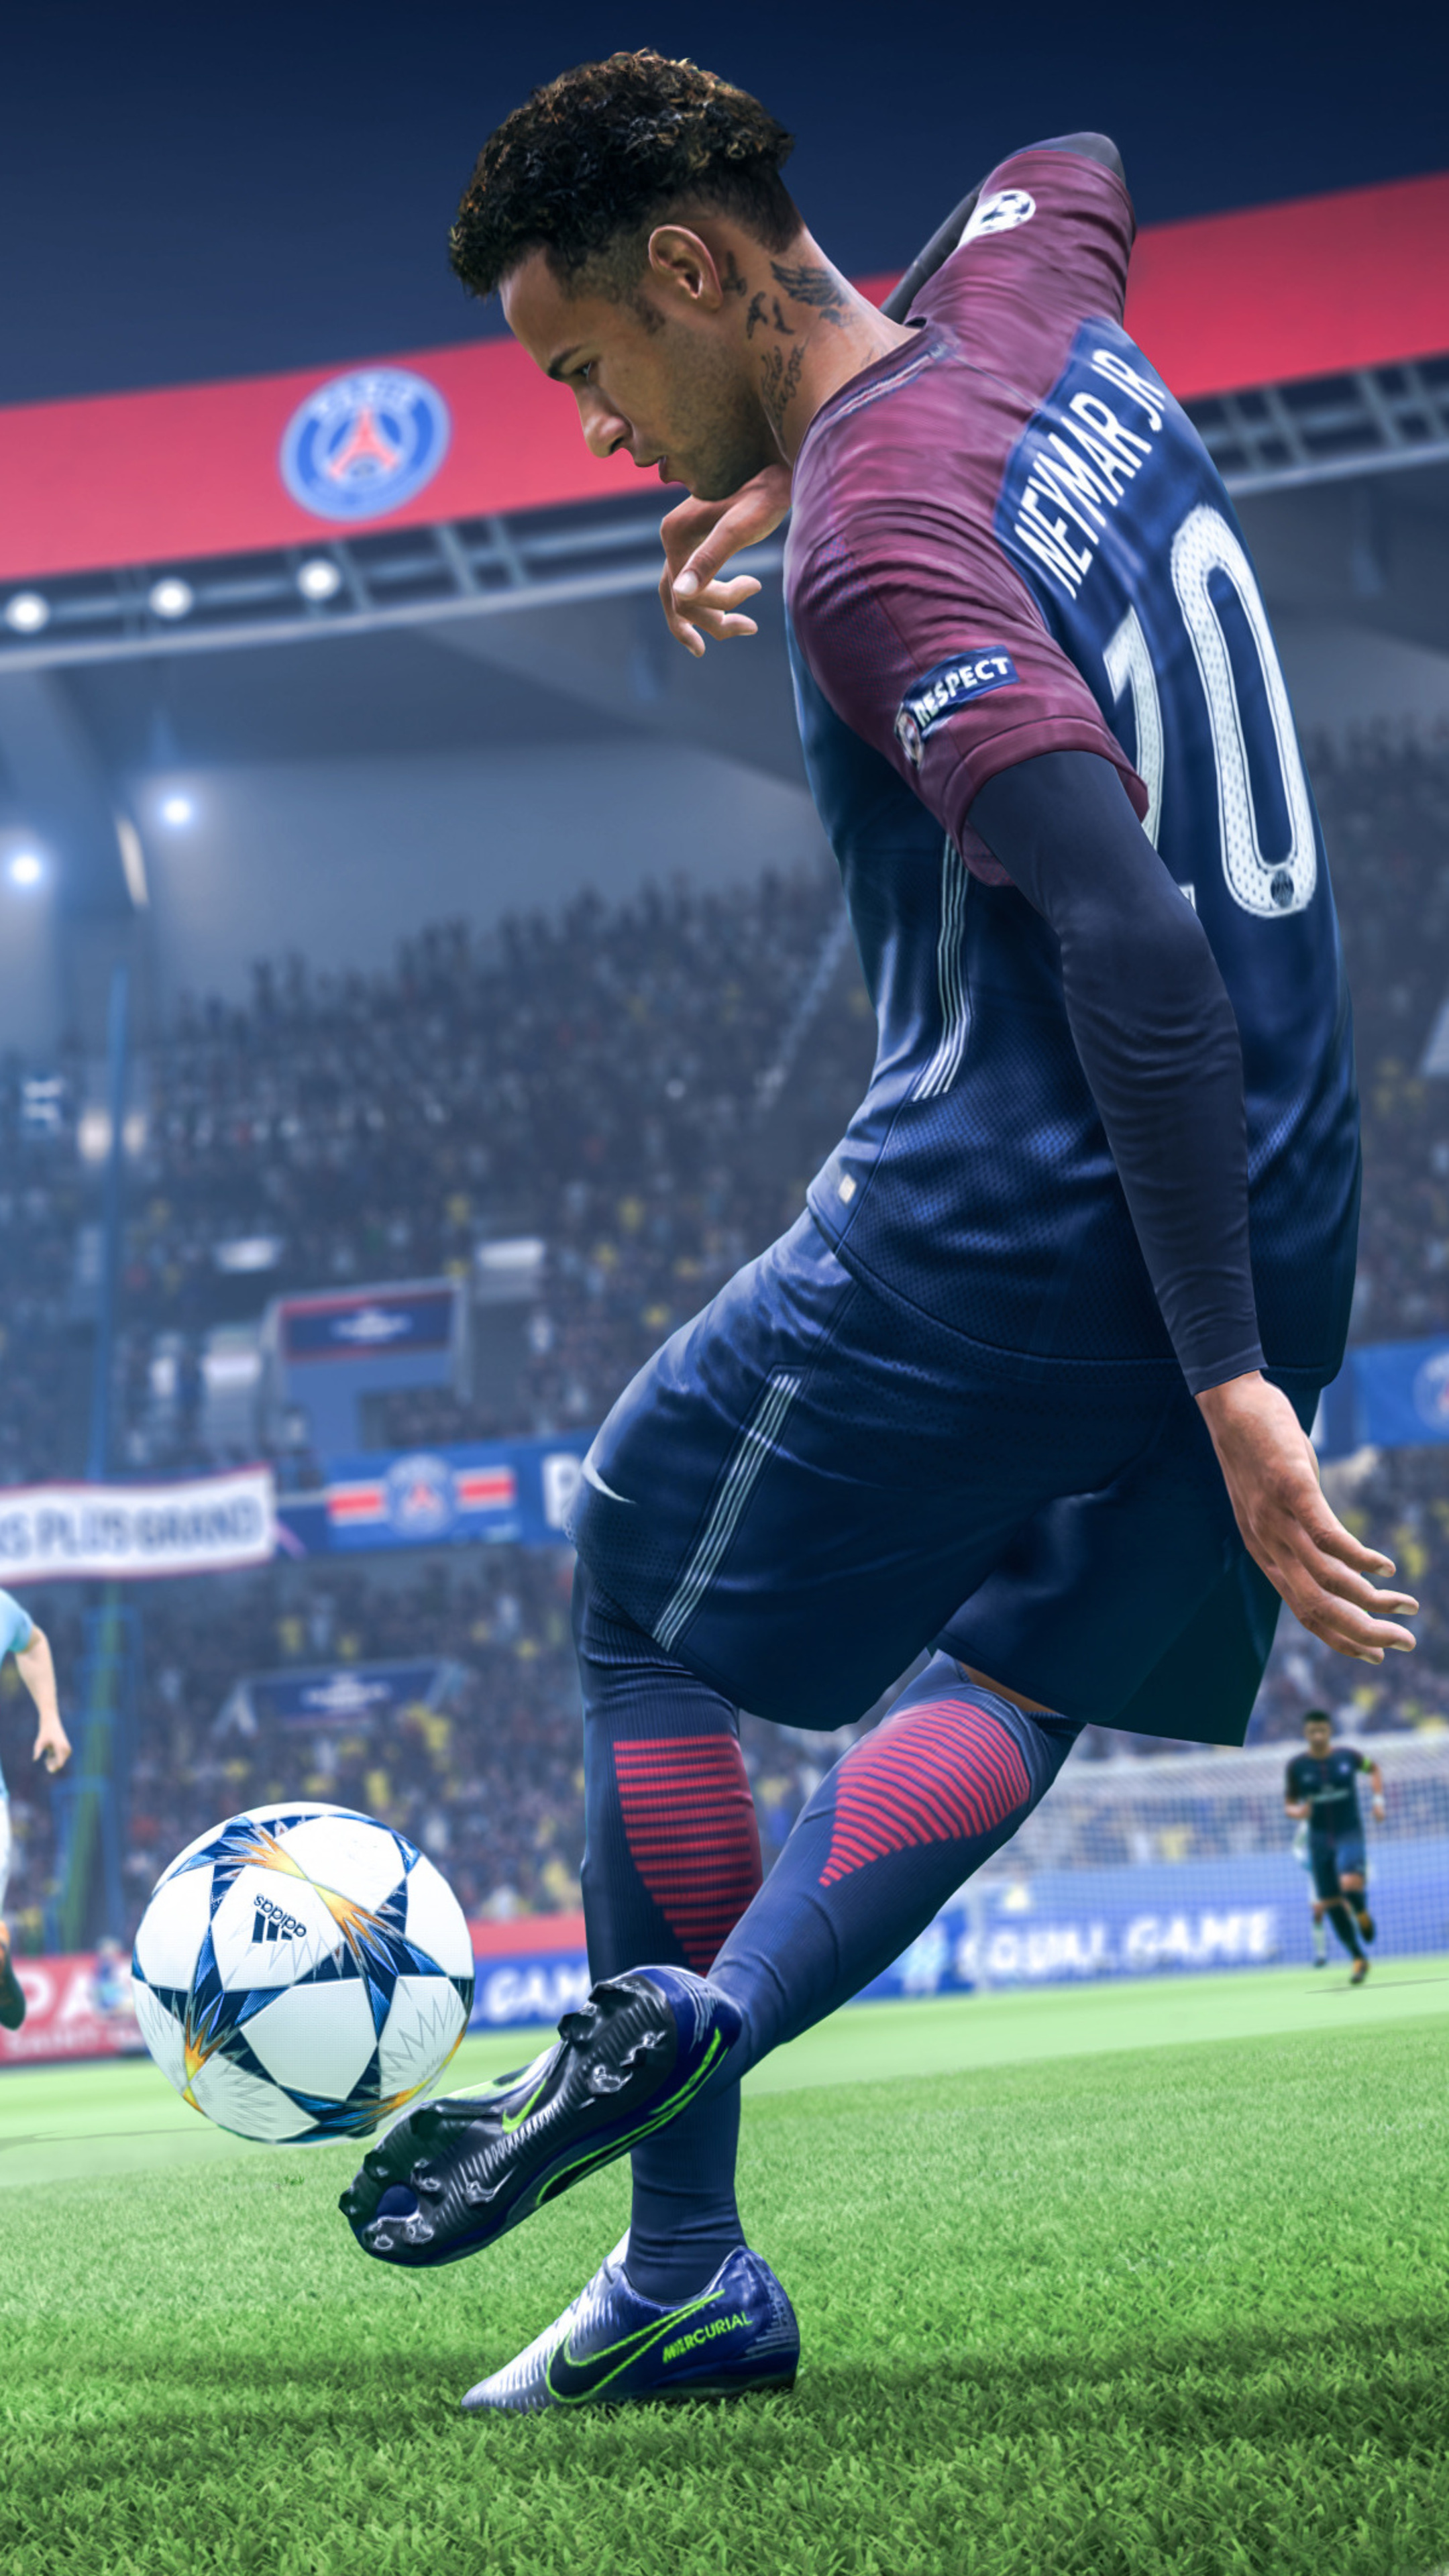 FIFA Soccer (Game): Neymar Jr, A Wide Man for Paris Saint-Germain in France. 2160x3840 4K Background.